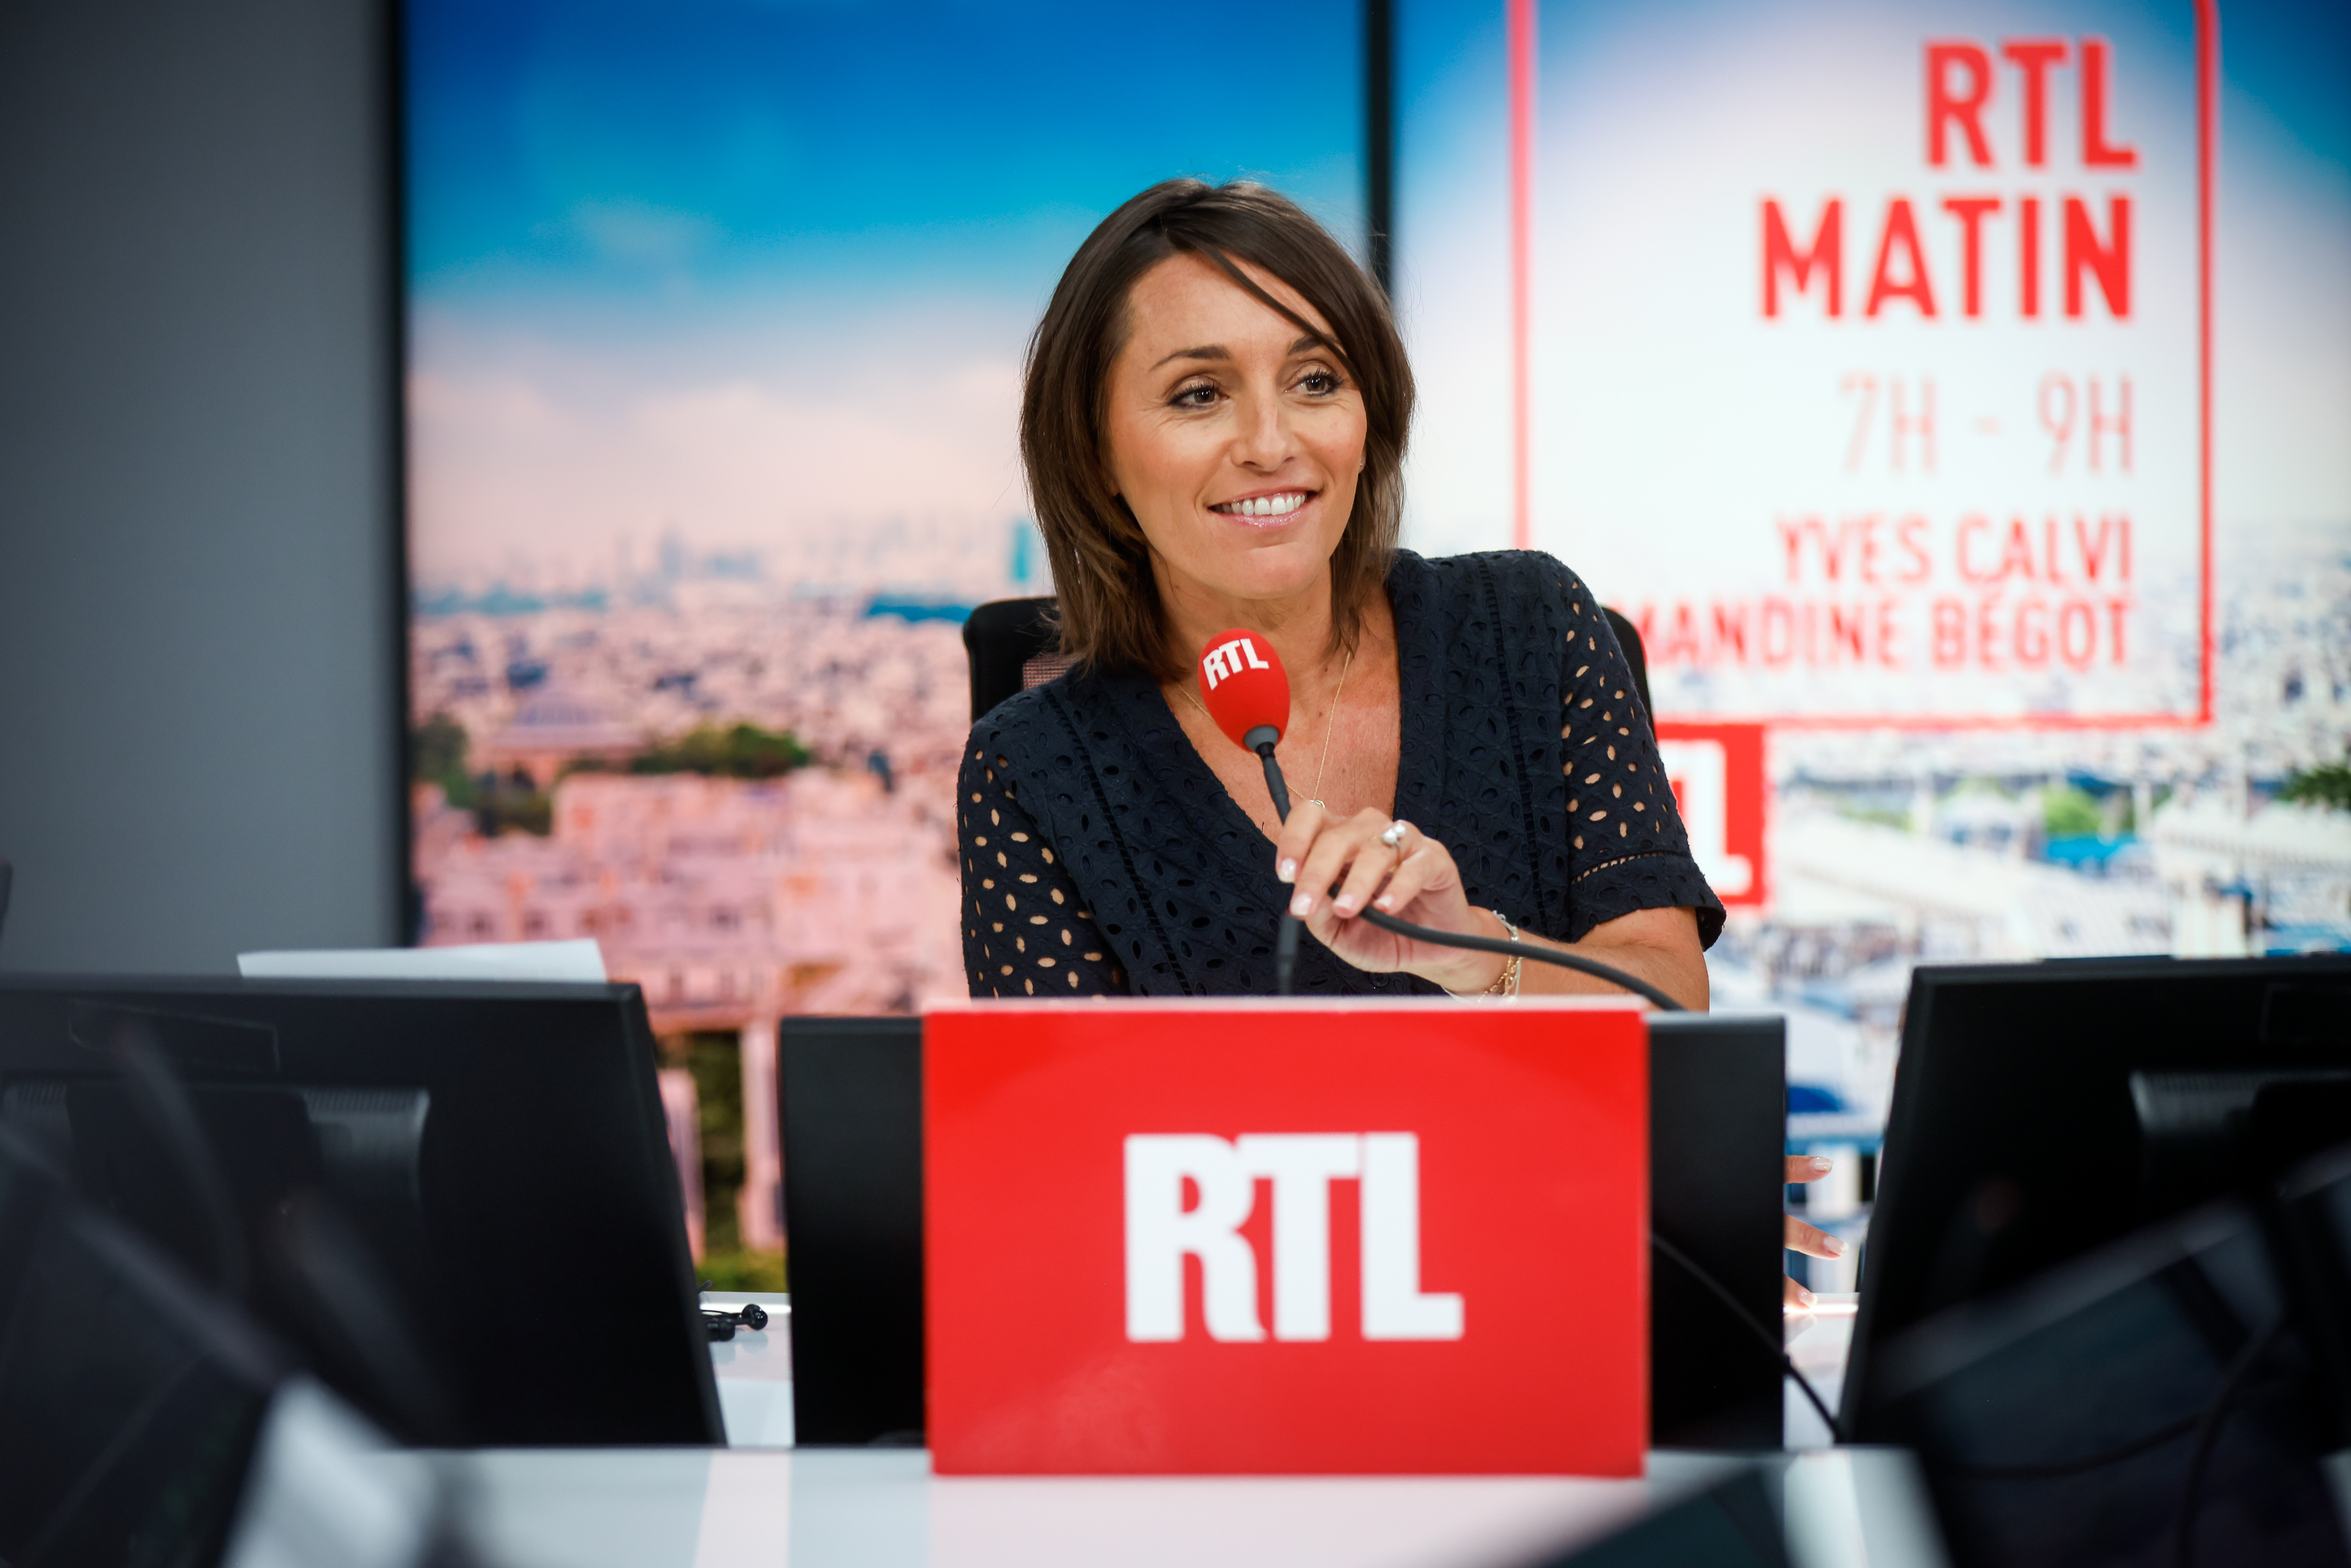 Amandine Bégot, coanimatrice de la matinale de RTL aux côtés d'Yves Calvi. ©Thomas PADILLA / AGENCE 1827 / RTL.